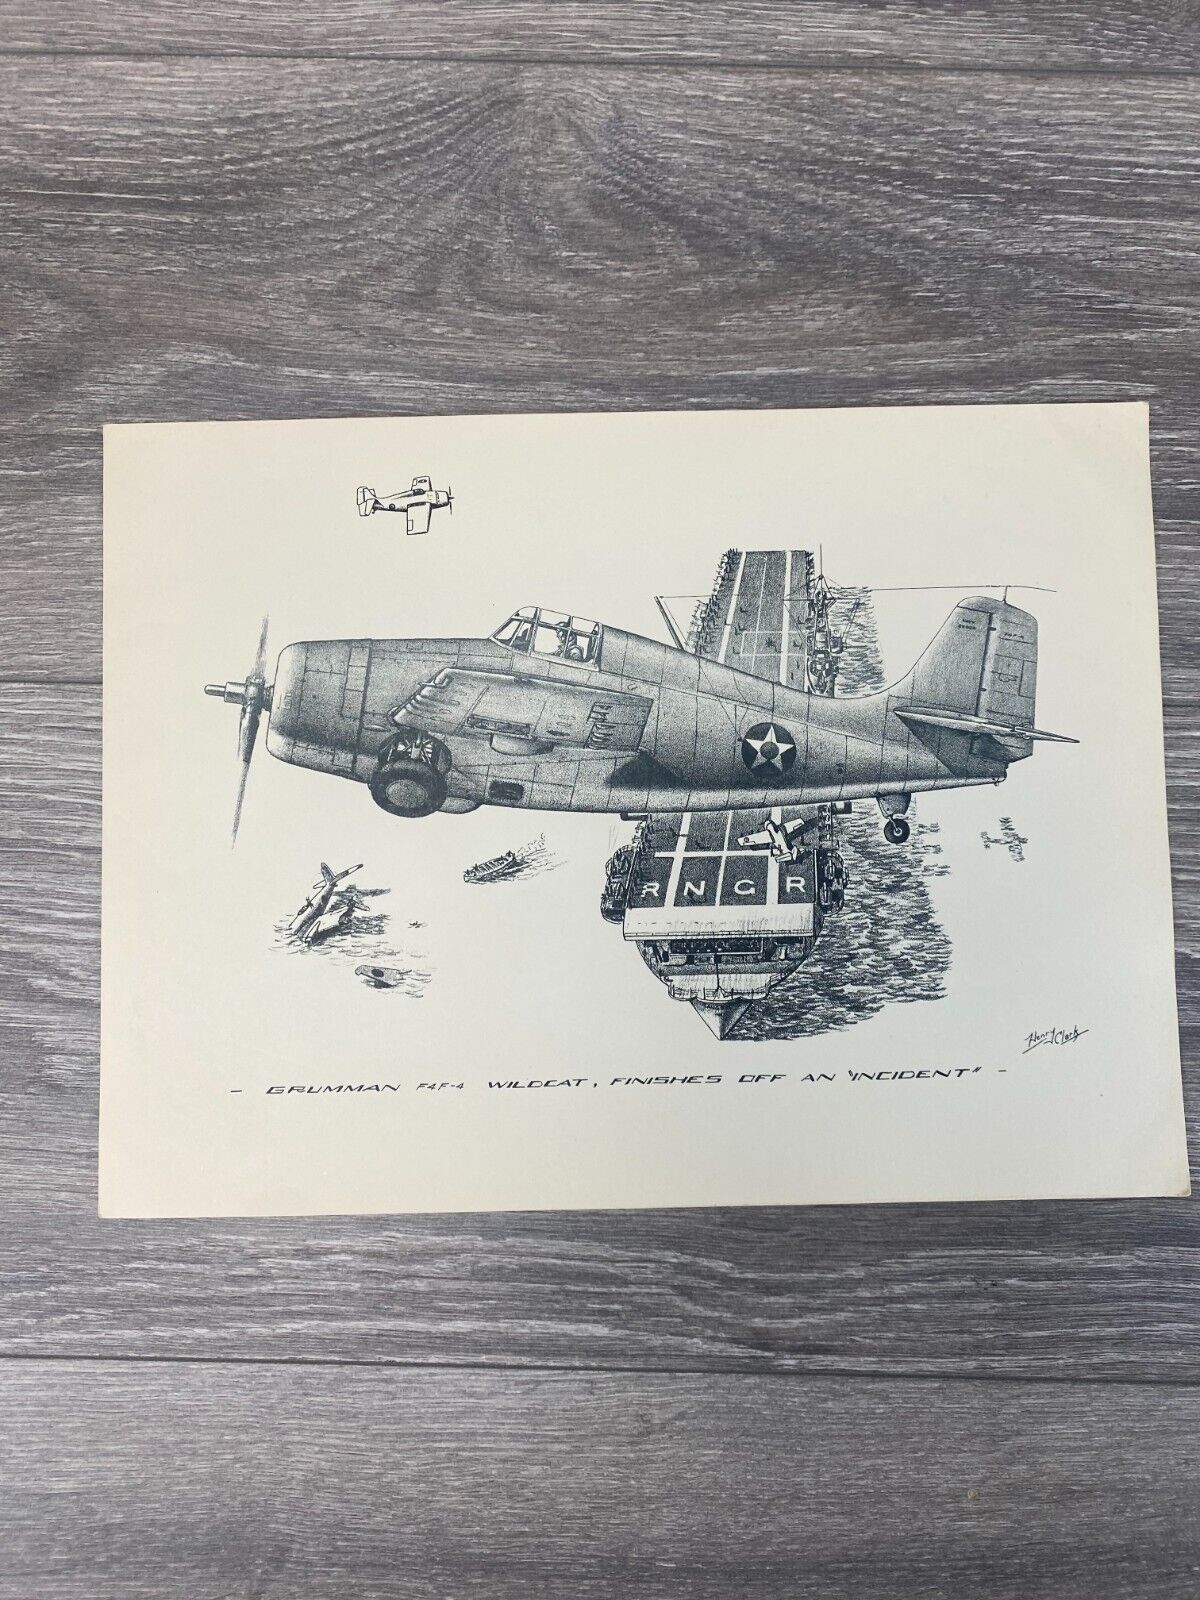 Henry Clark Art Print Grumman F4F-4 Wildcat Finishes Off An Incident 12 x 9